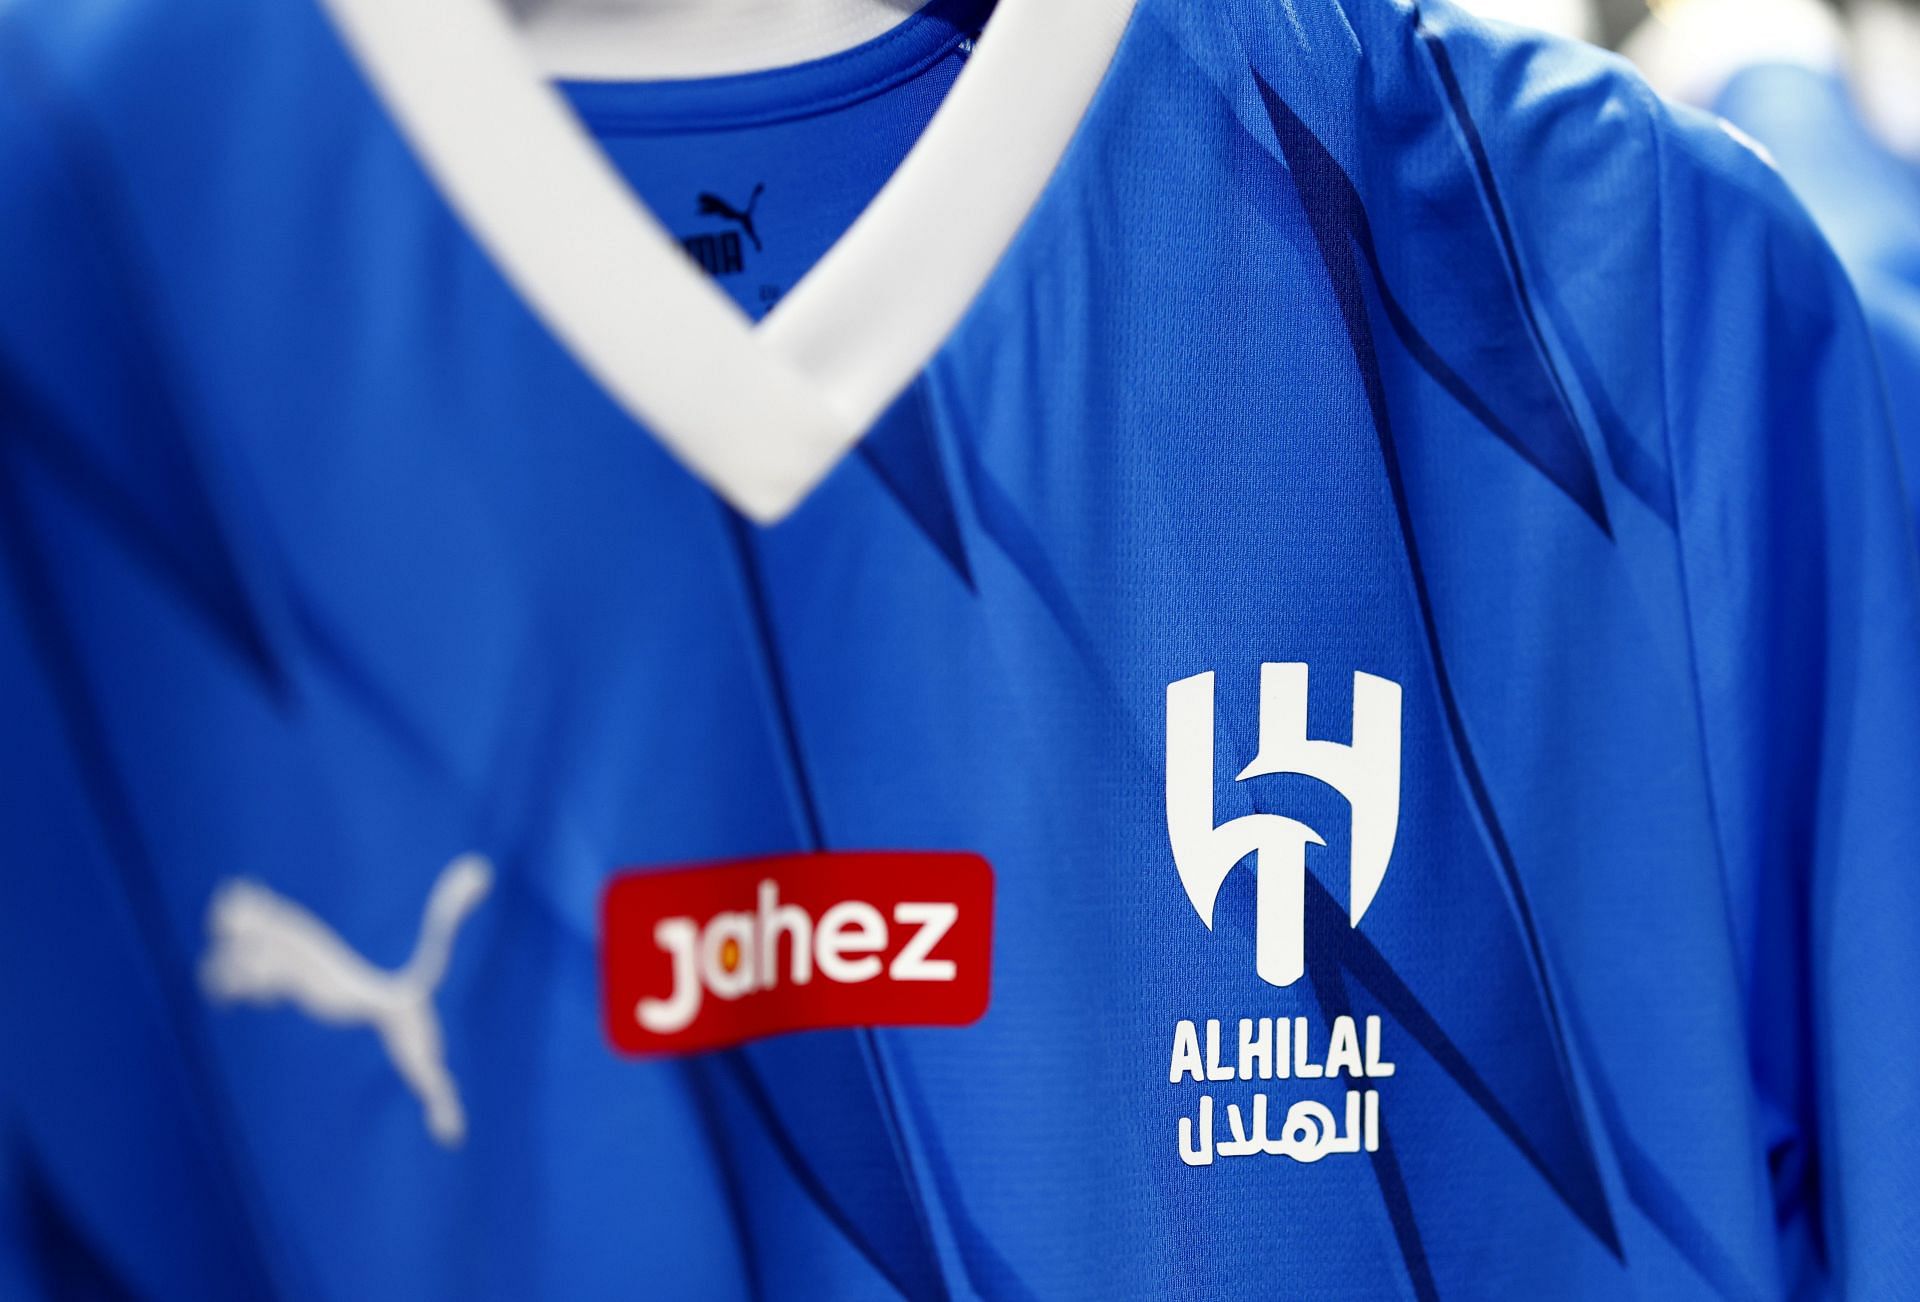 Al-Hilal jersey (via Getty Images)